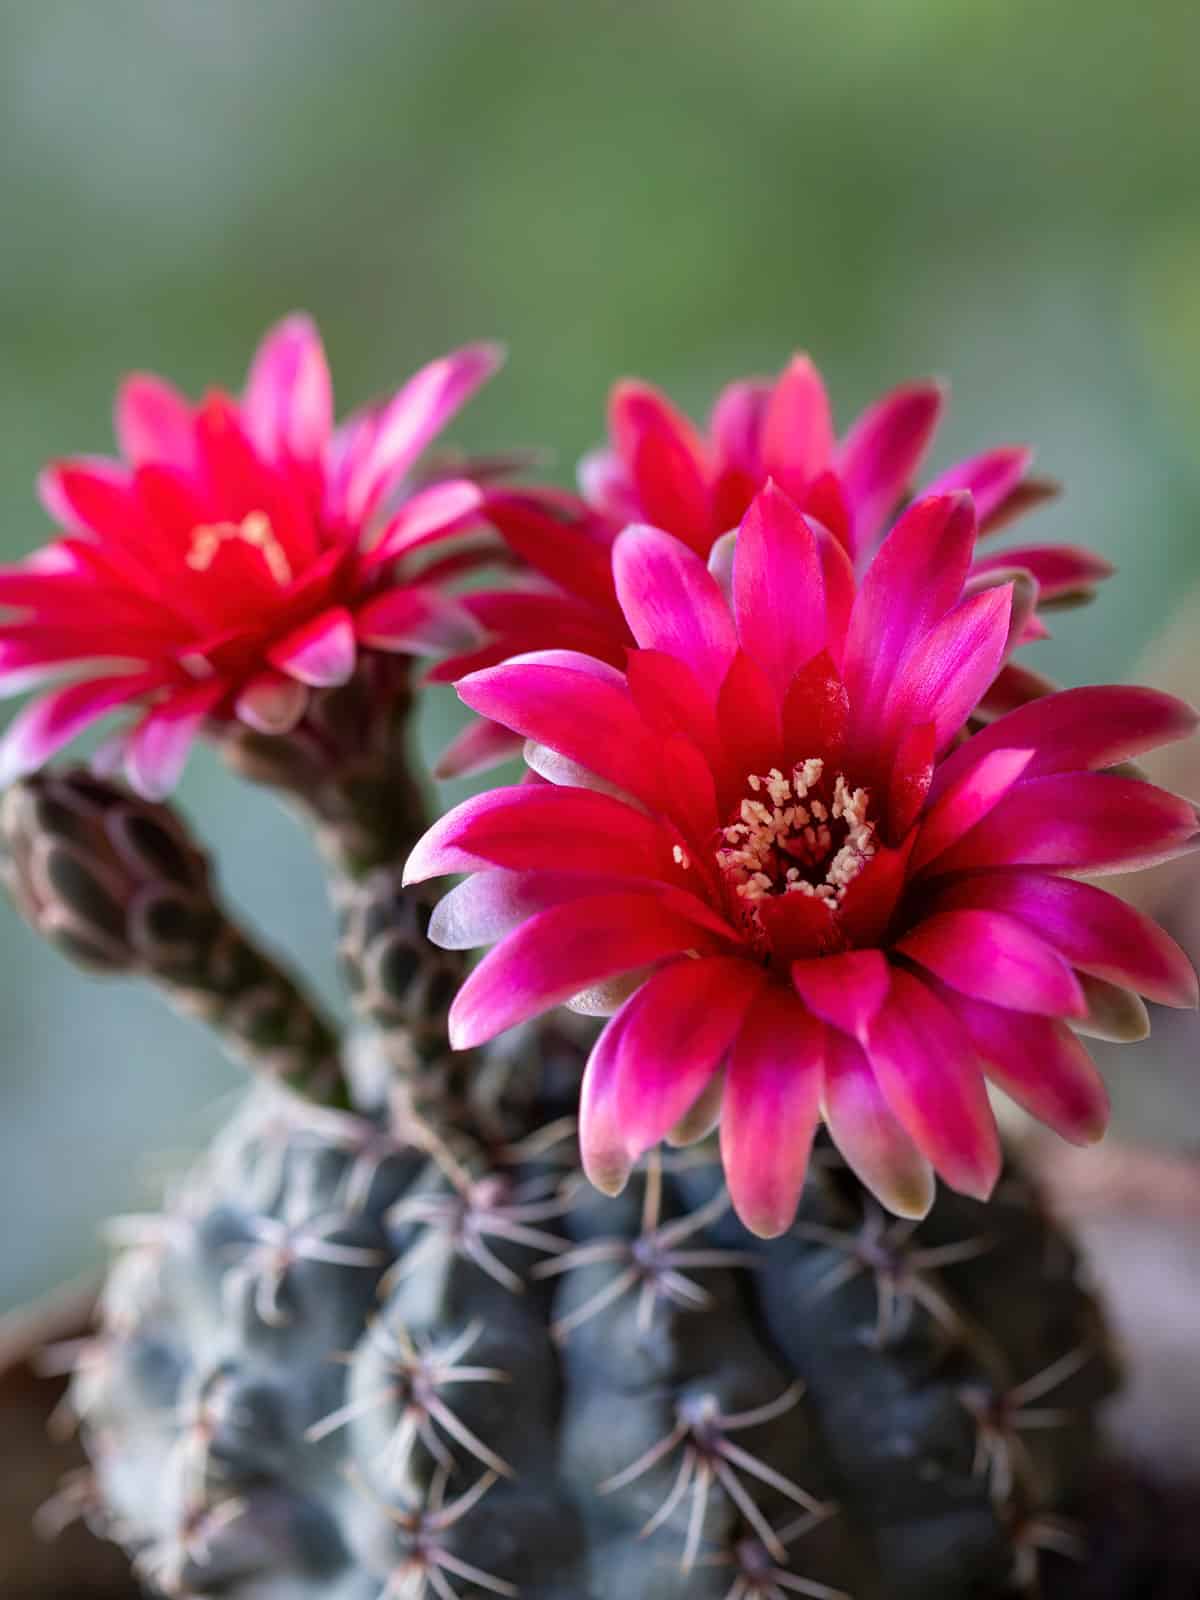 Gorgeous pink petals of a Claret cup cactus